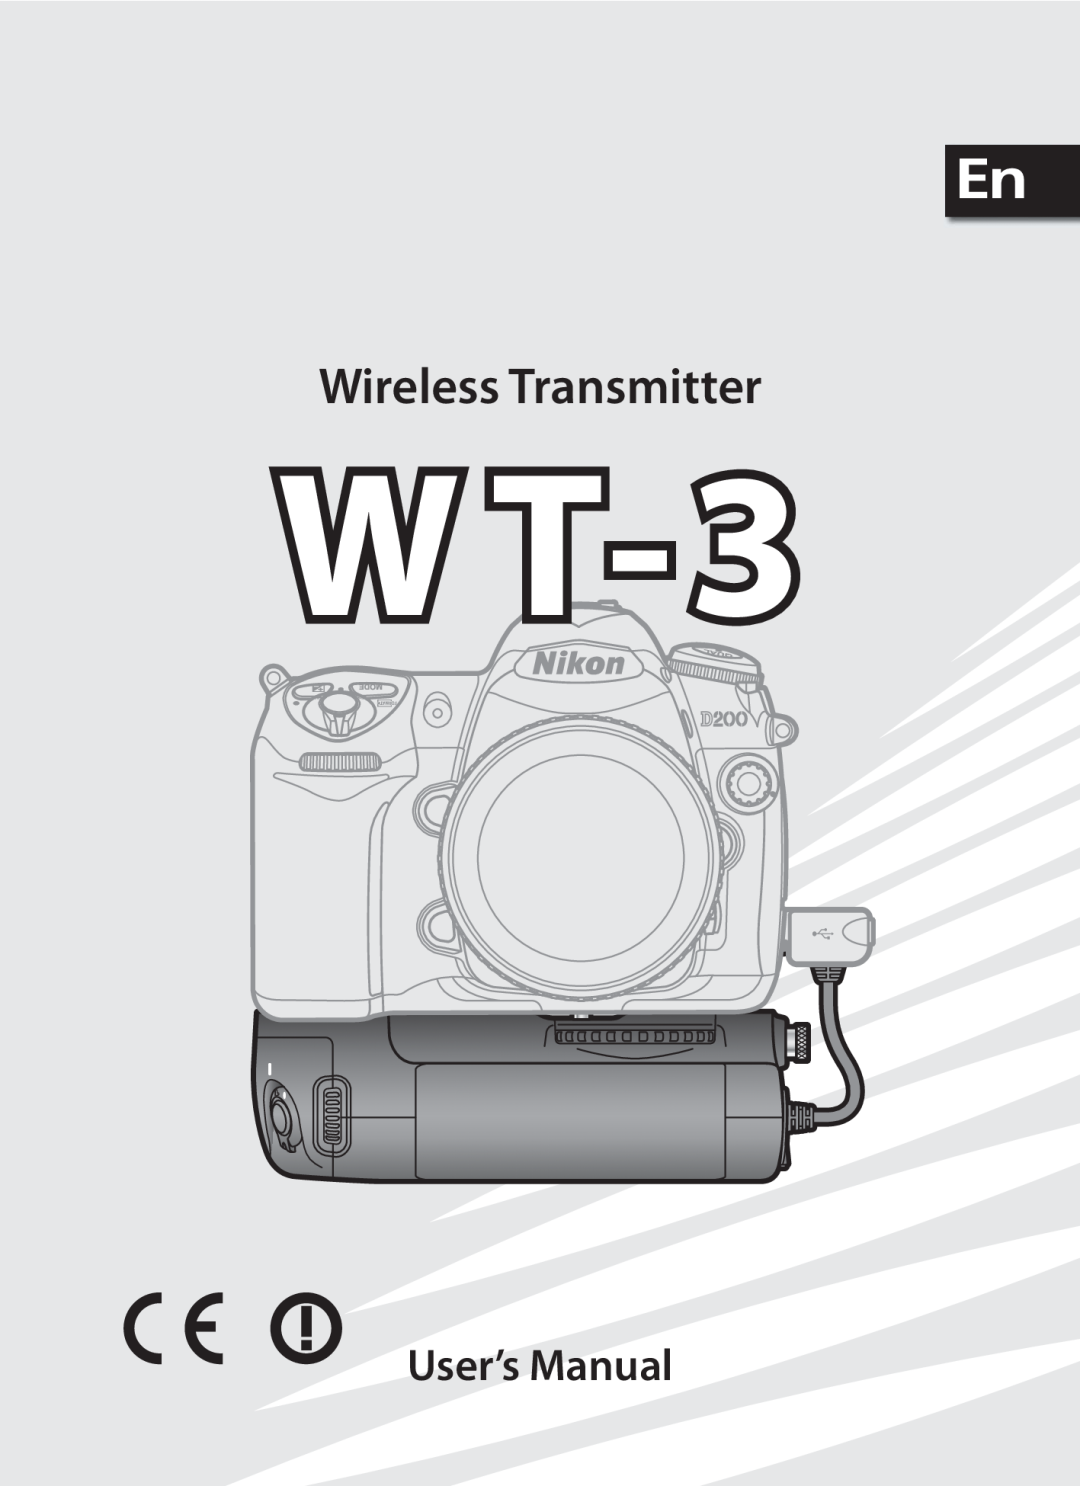 Nikon WT-3 user manual W T-3, Wireless Transmitter, User’s Manual 